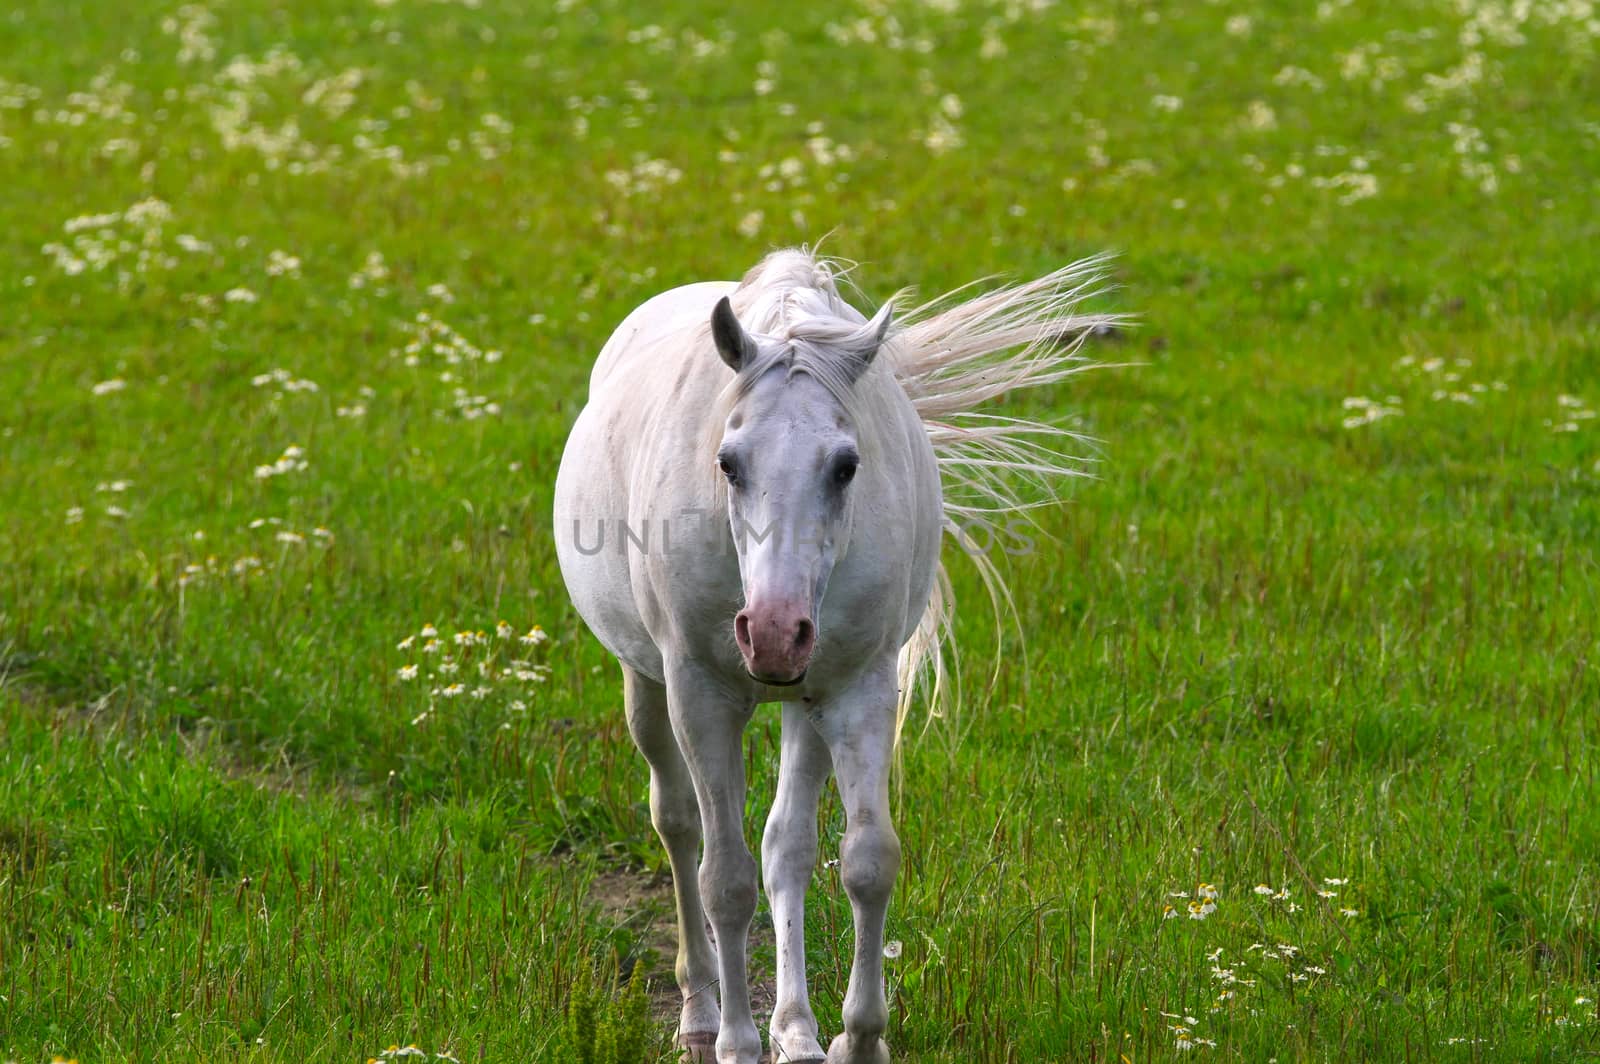 Beautiful white horse walking towards the camera on green field.